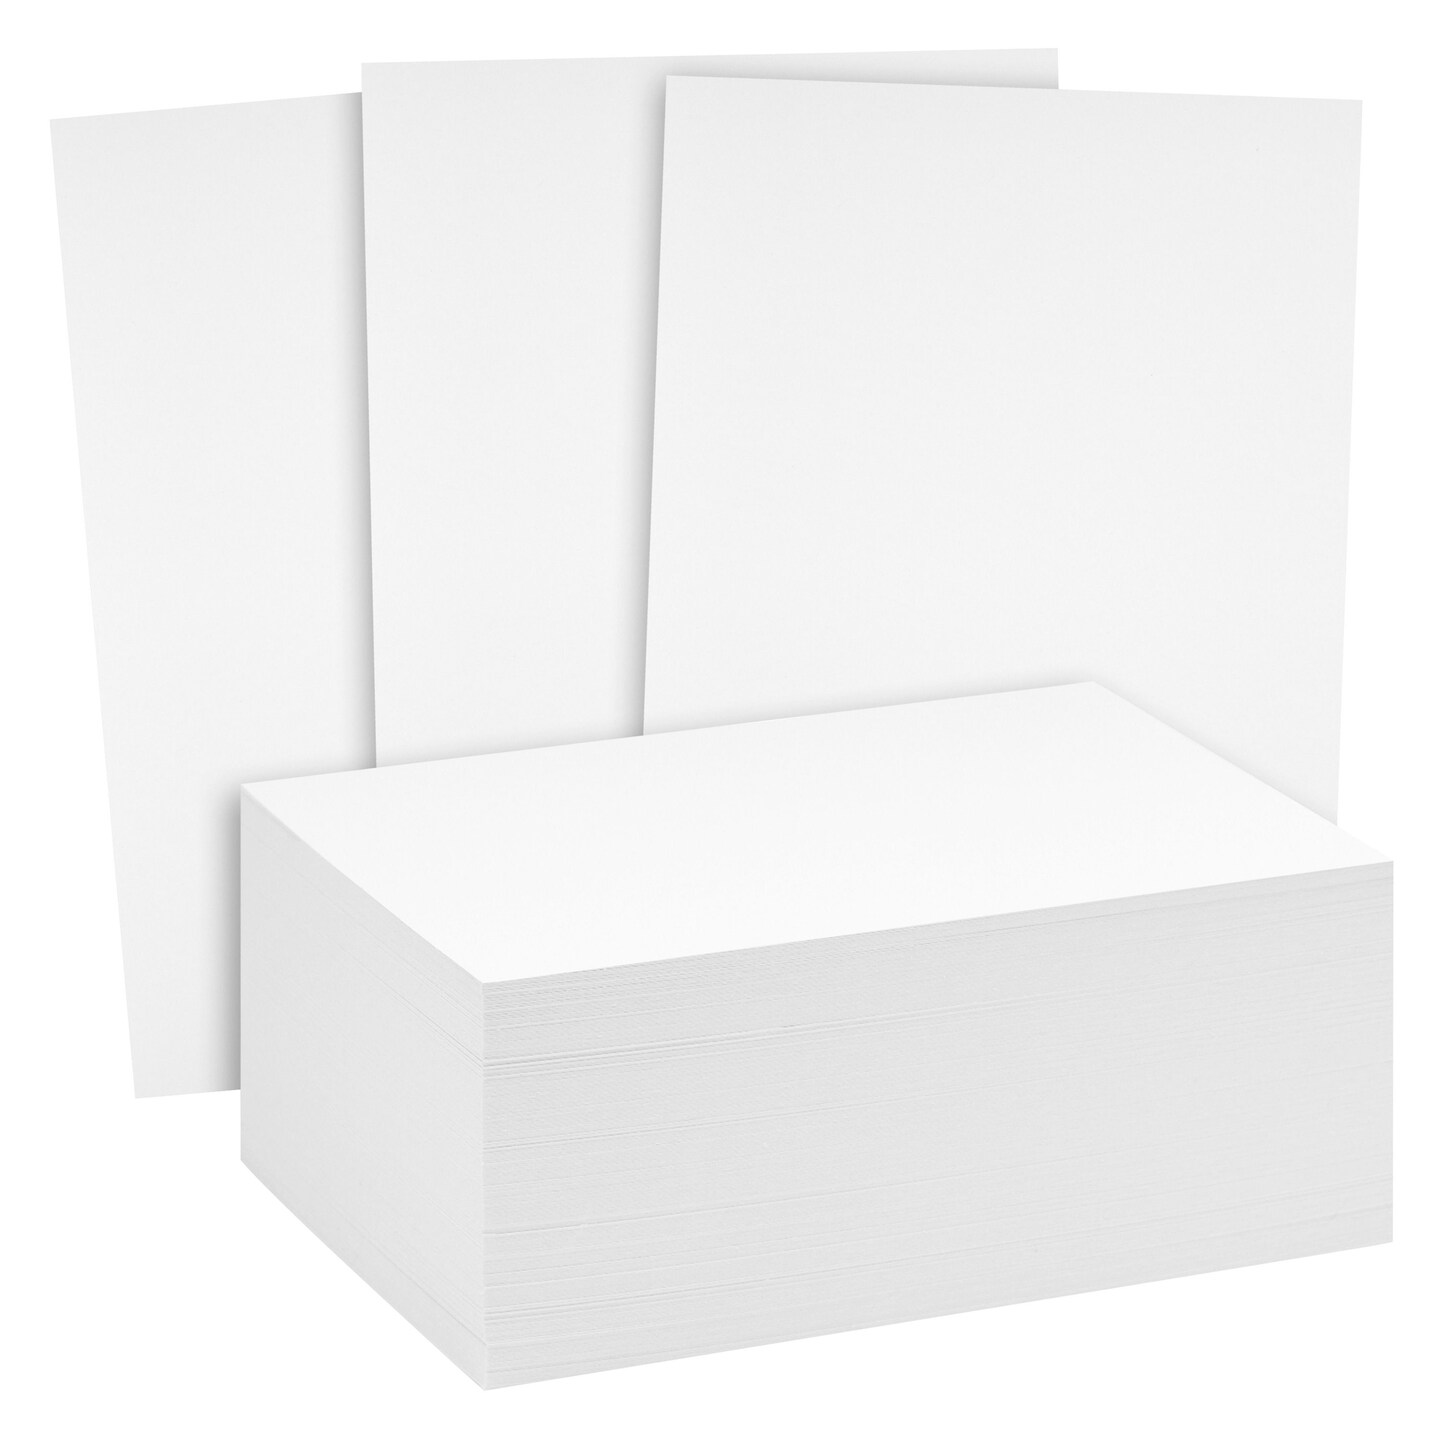 200-pieces-5x7-cardstock-postcards-blank-invitation-printer-paper